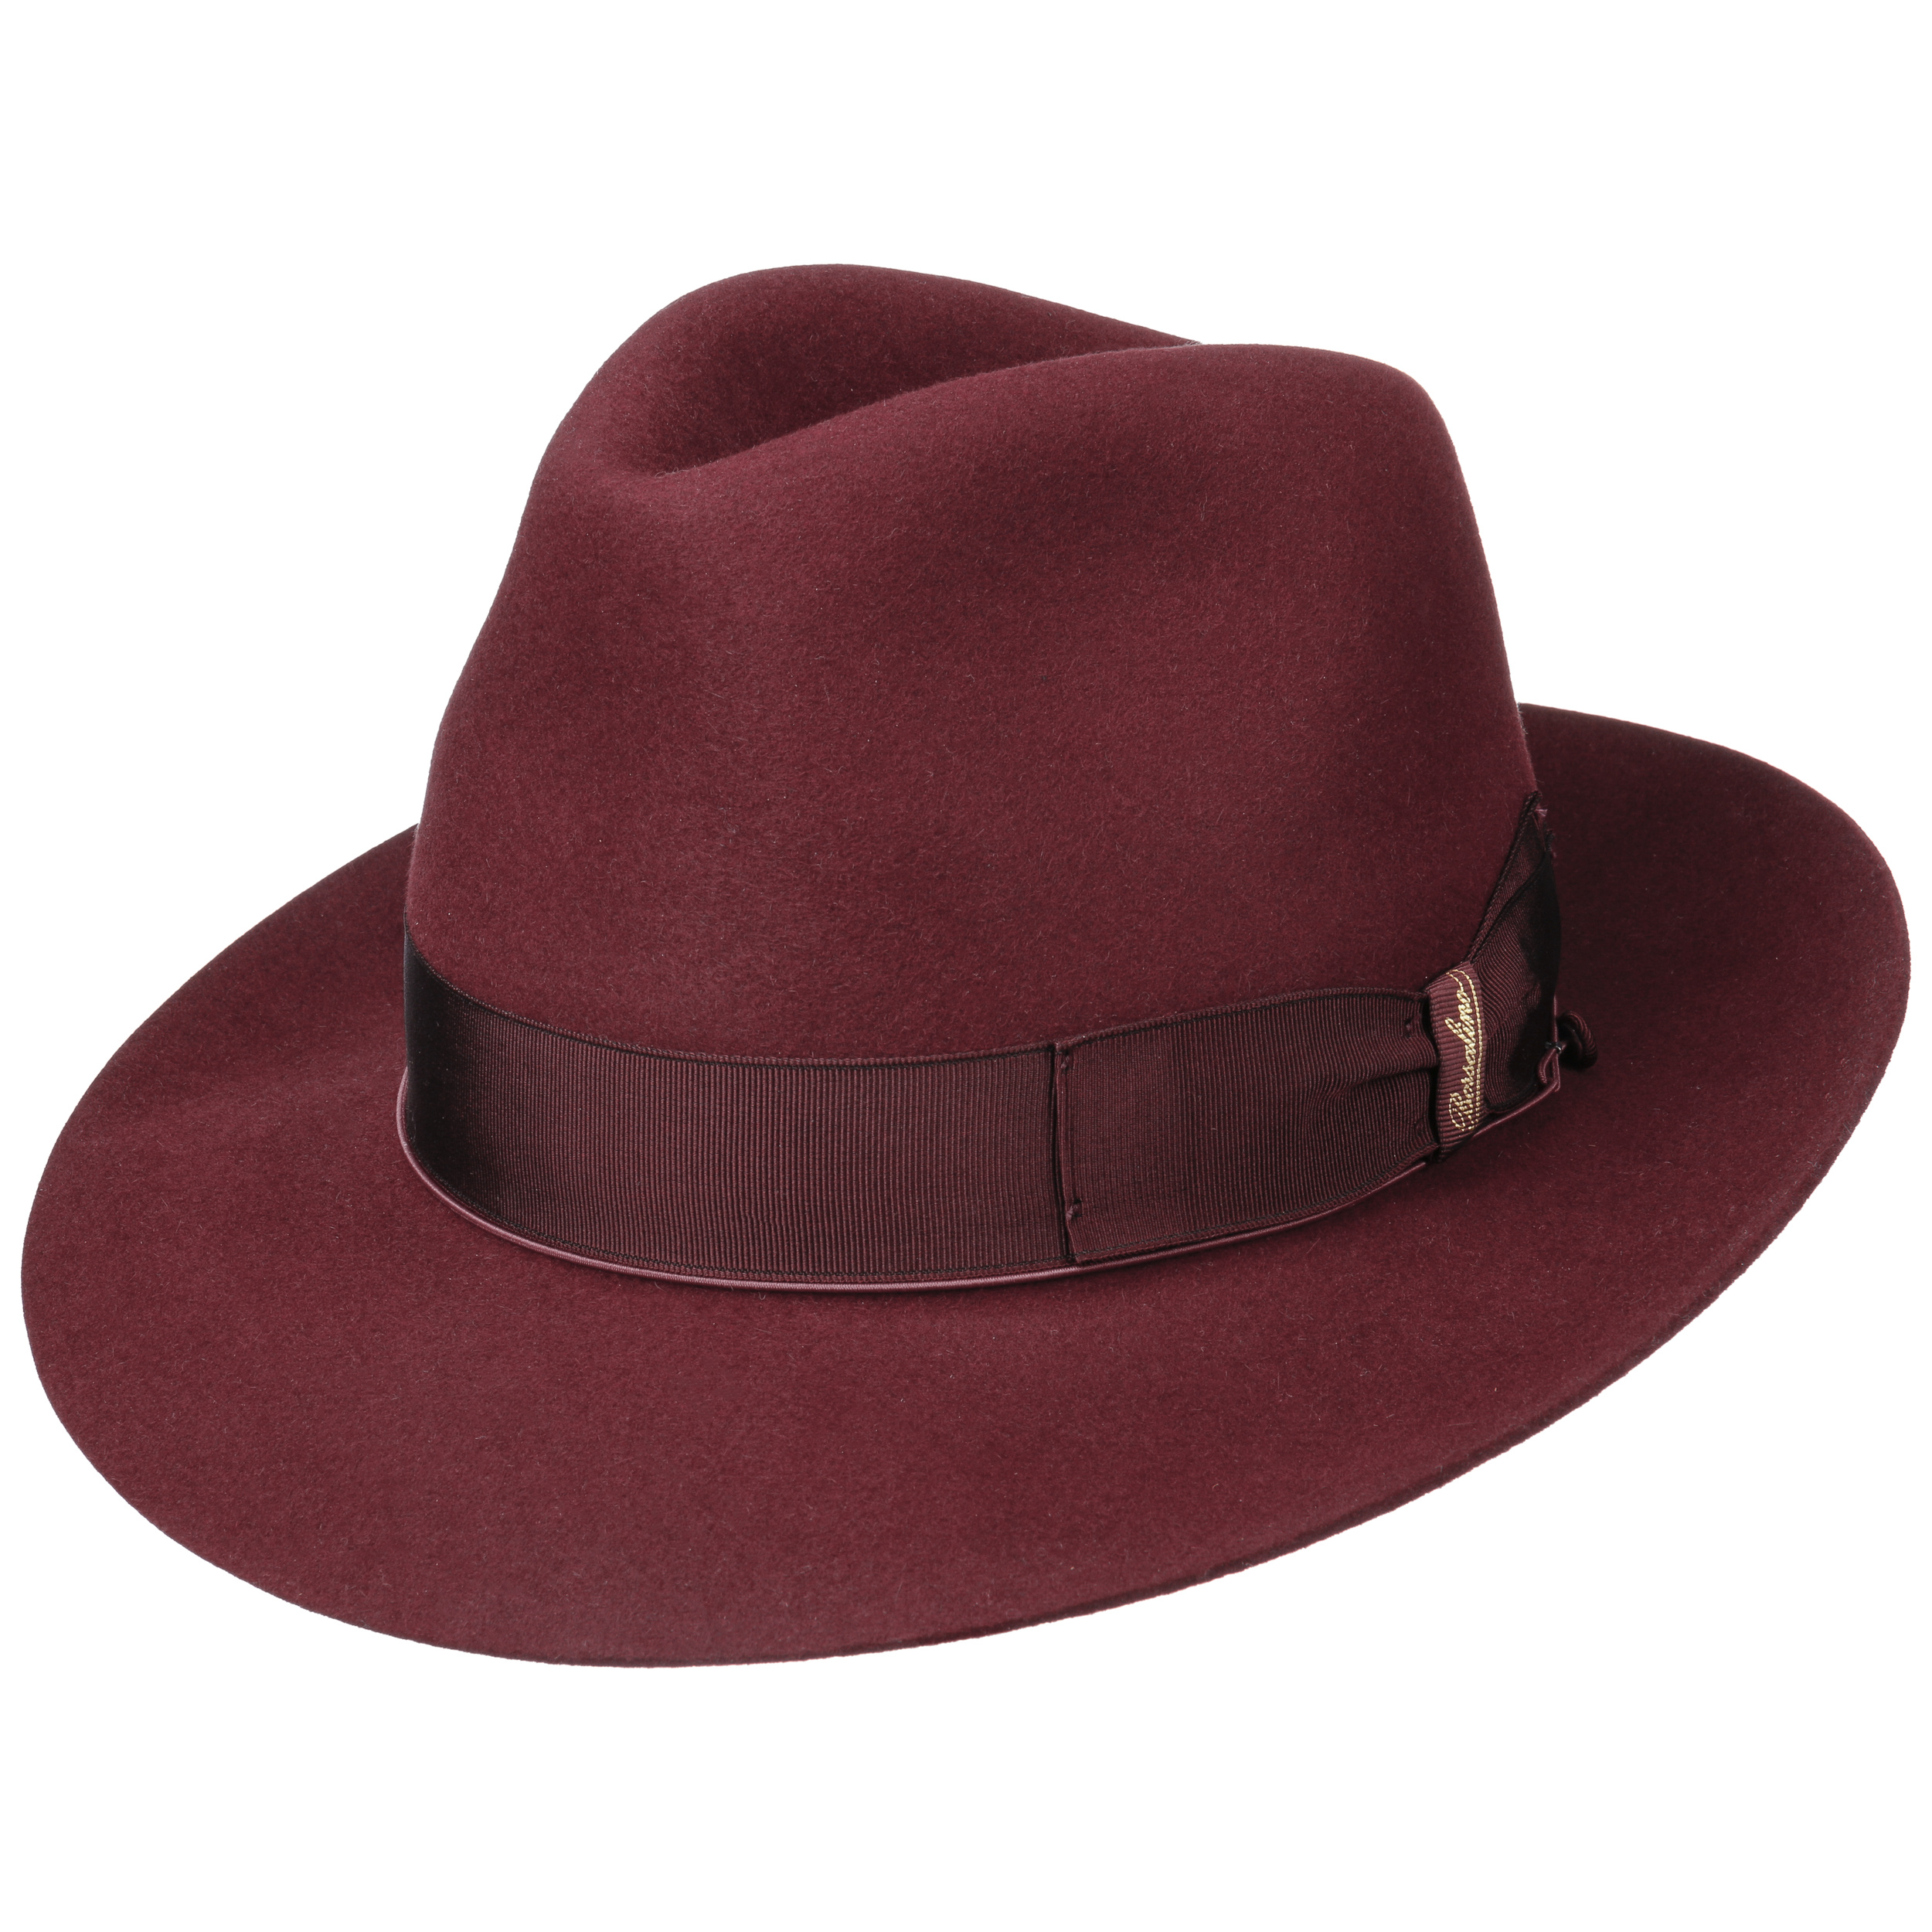 Classic Hat by Borsalino